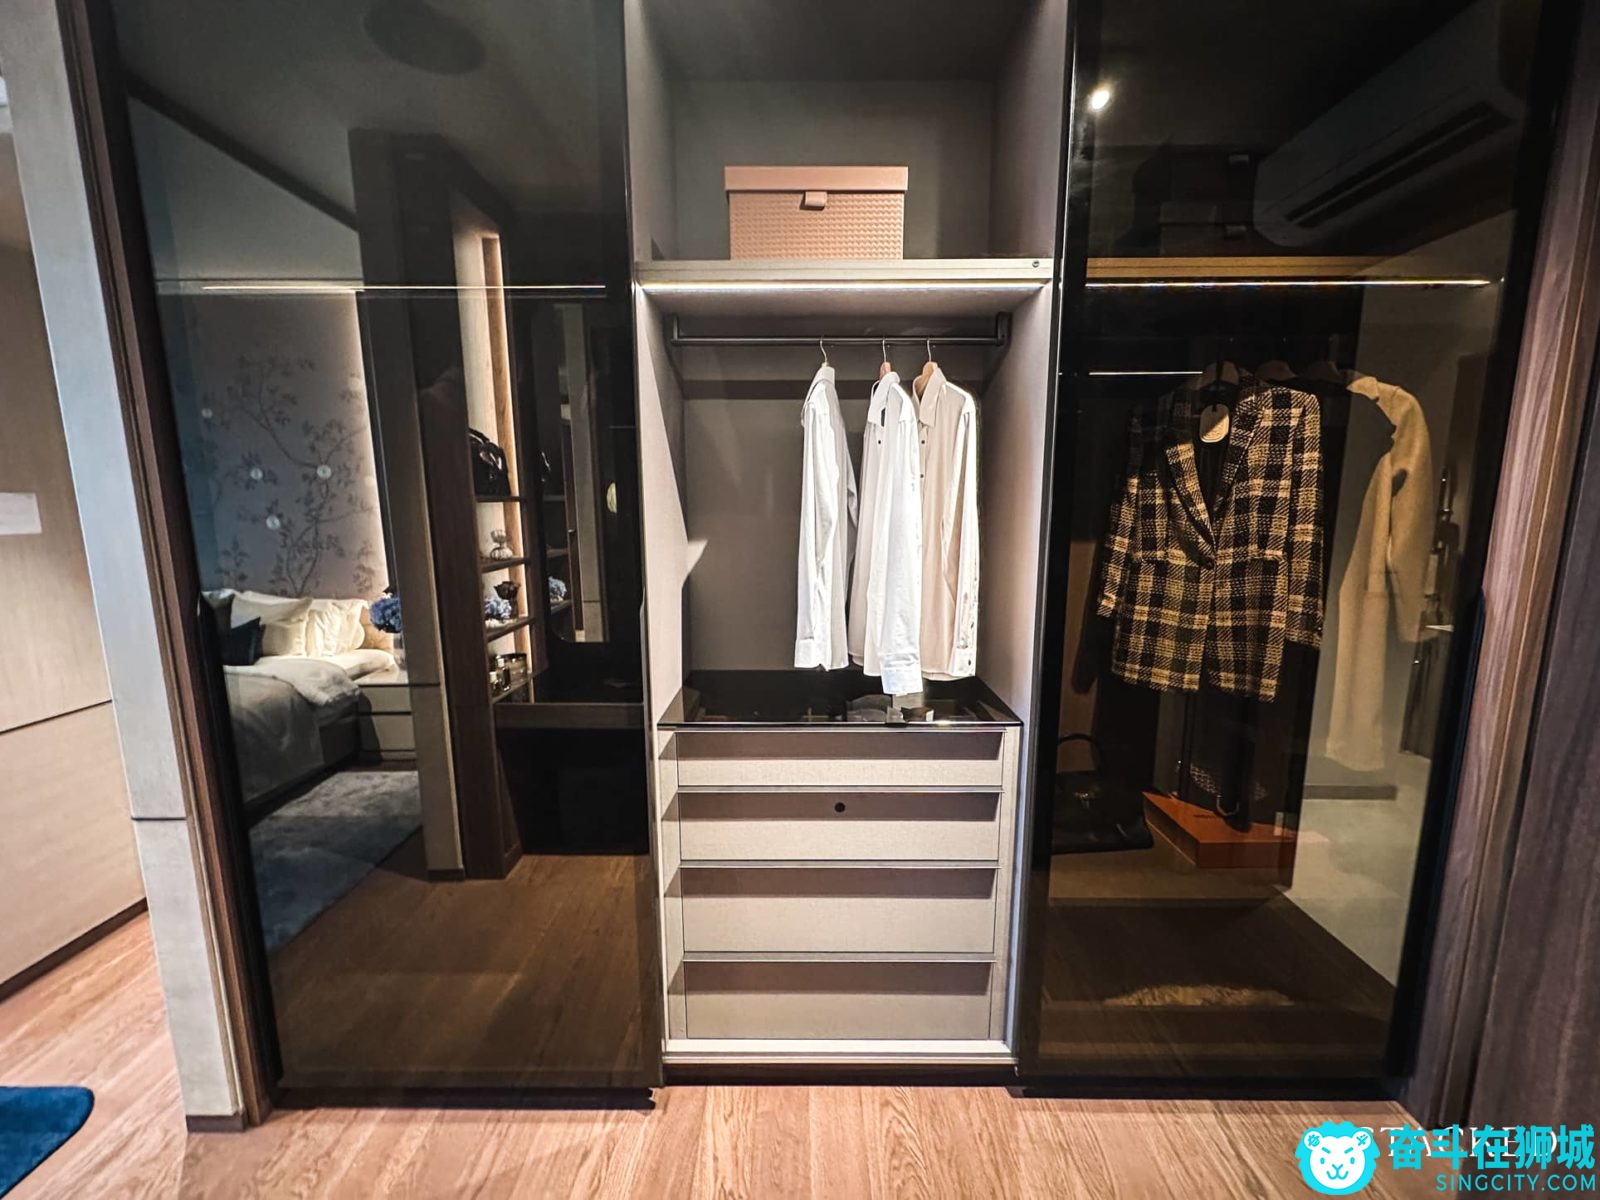 the-continuum-5-bedroom-master-bedroom-wardrobe-2-1600x1200.jpg